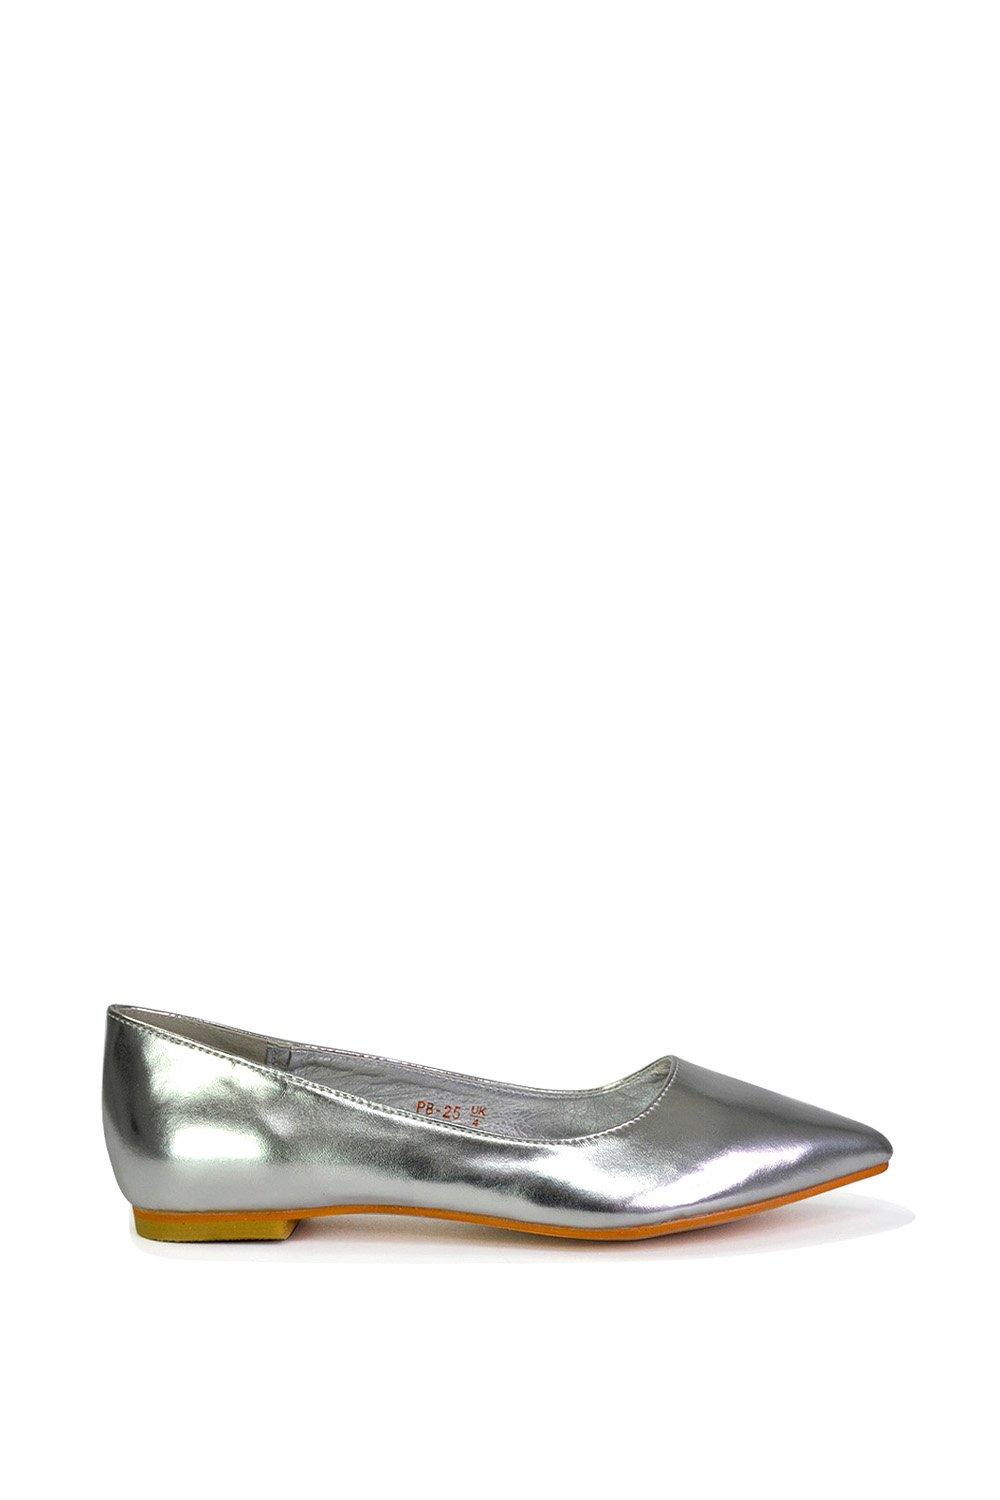 XY London Women's 'Bubbles' Pointed Toe Slip on Flat Ballerina Pump Shoes|Size: 7|metallic silver